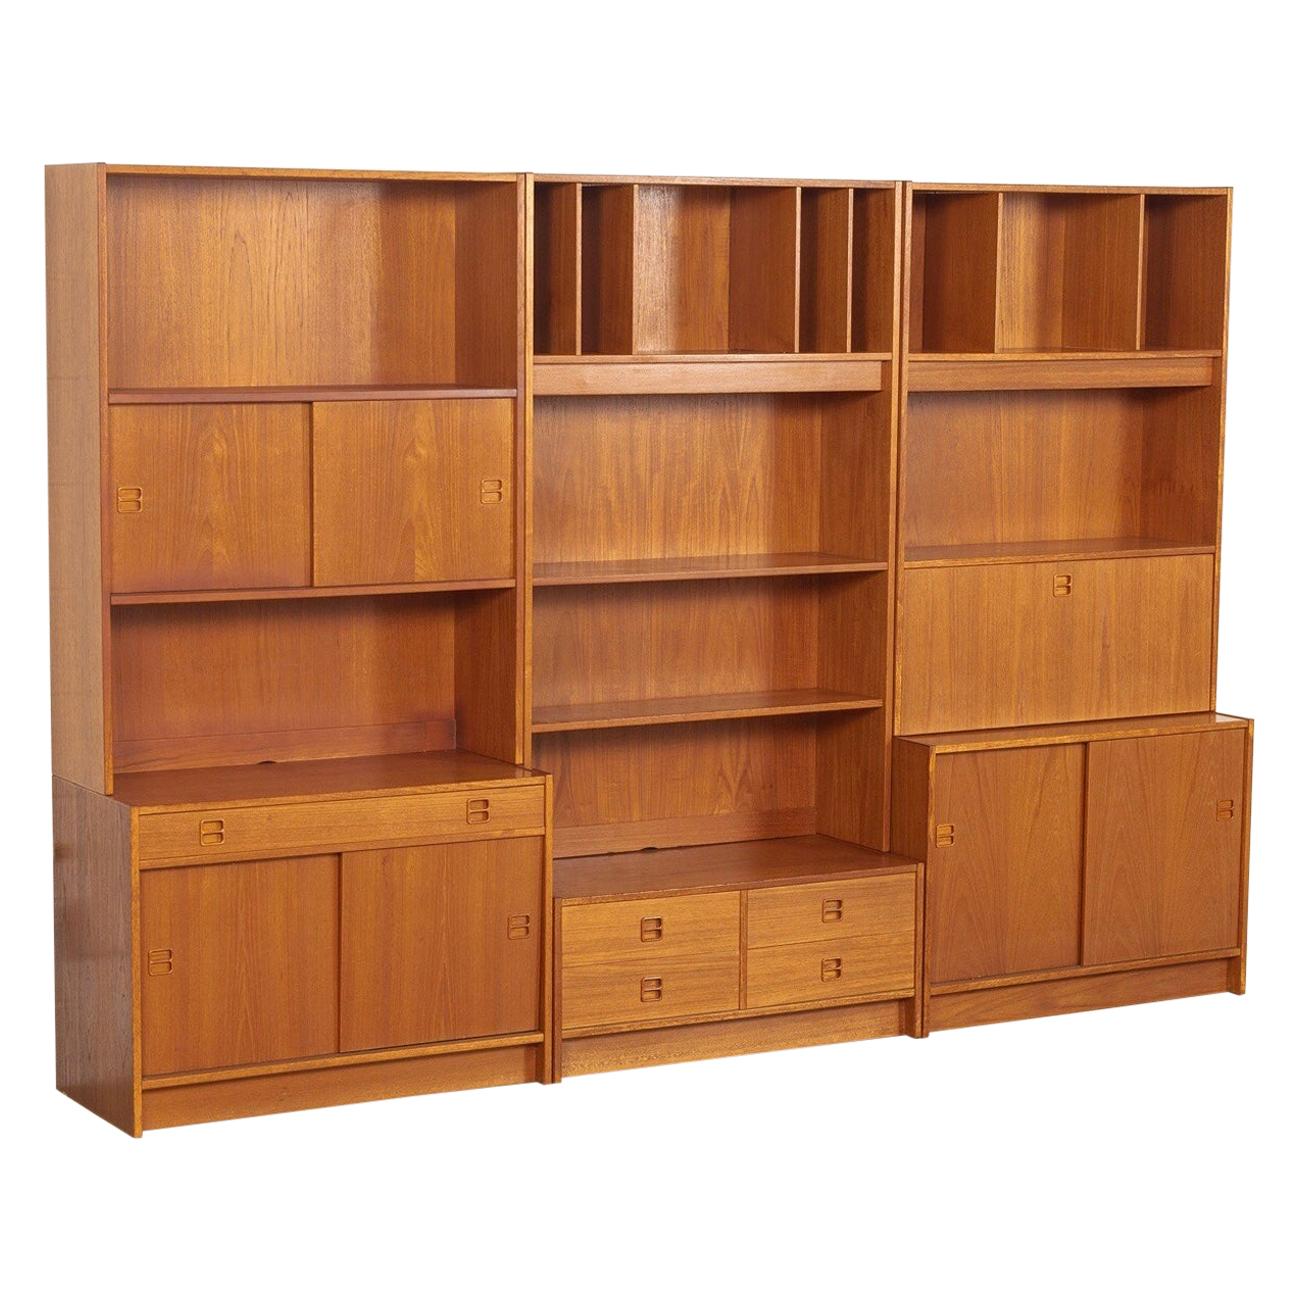 Midcentury Danish Modern Teak Wood Shelving Unit Bookcase Display Cabinet, 1970s